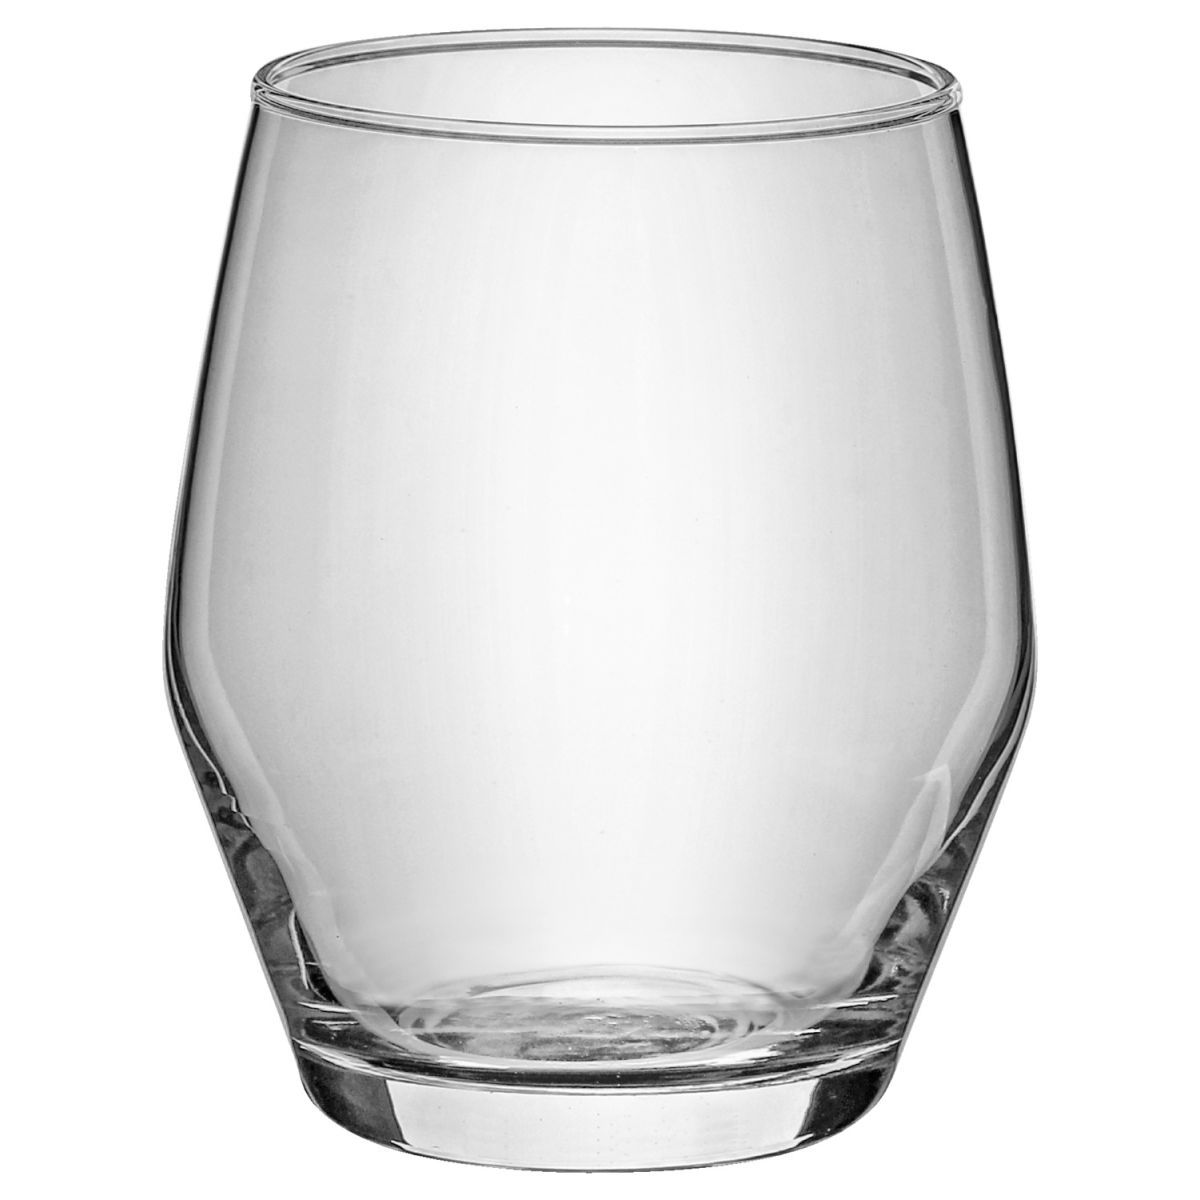 LAV Whiskyglas Ella; 370ml, 6.8x10 cm (ØxH); transparant; 6 stuk / verpakking